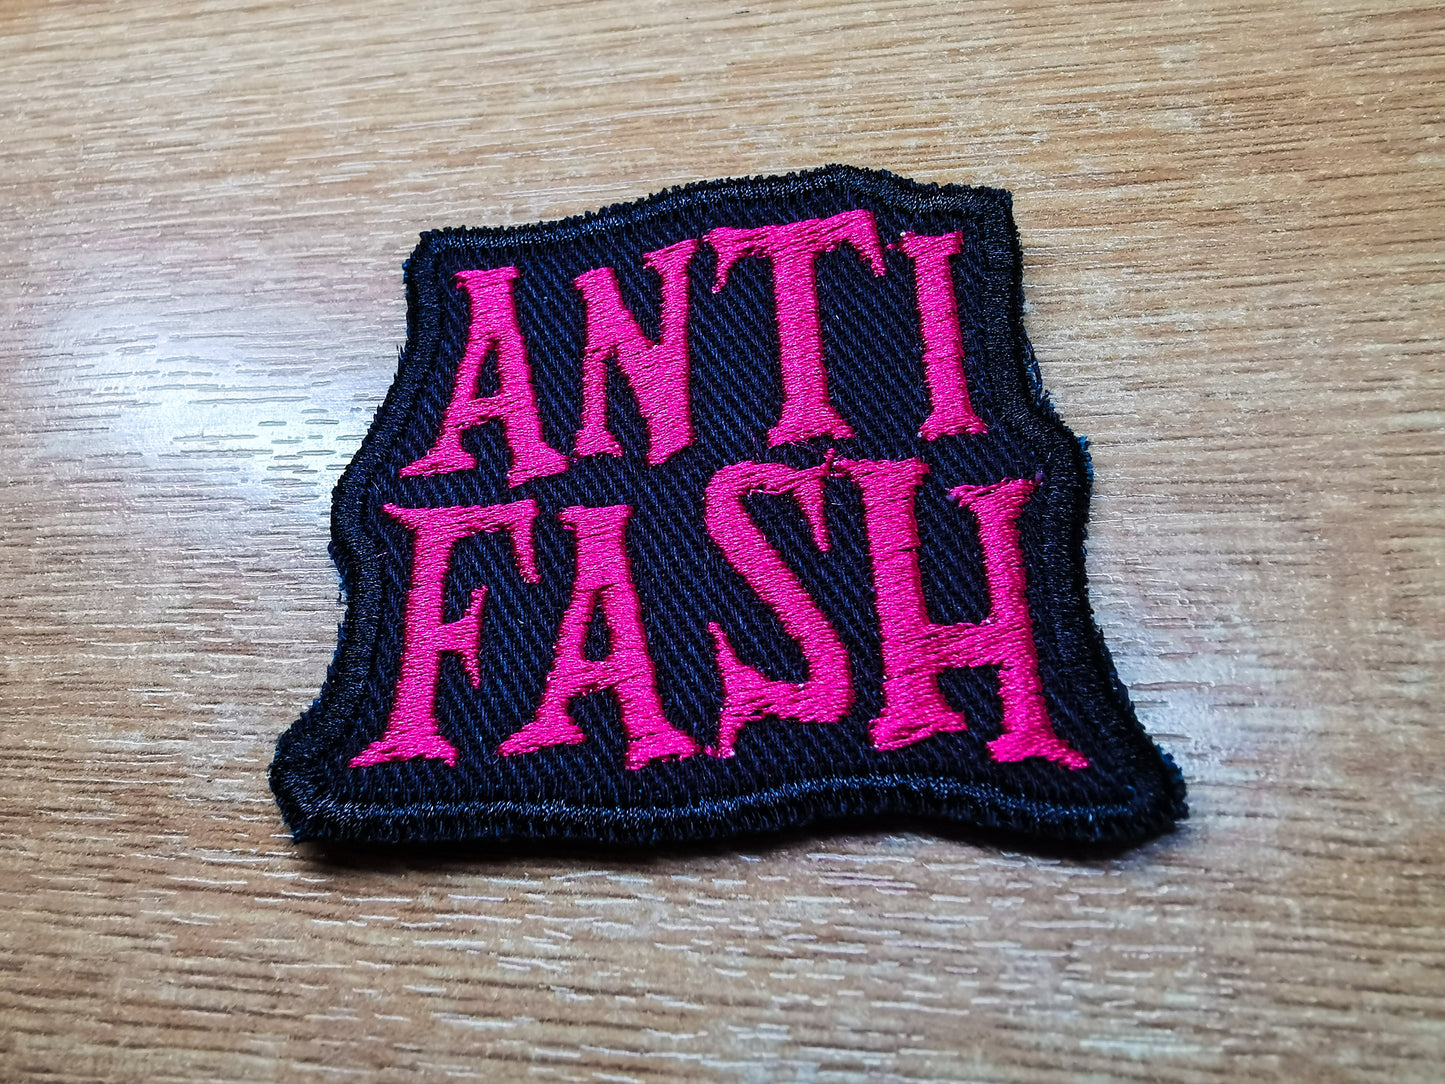 Anti Fash Antifacist Embroidered Patch Politics Punk